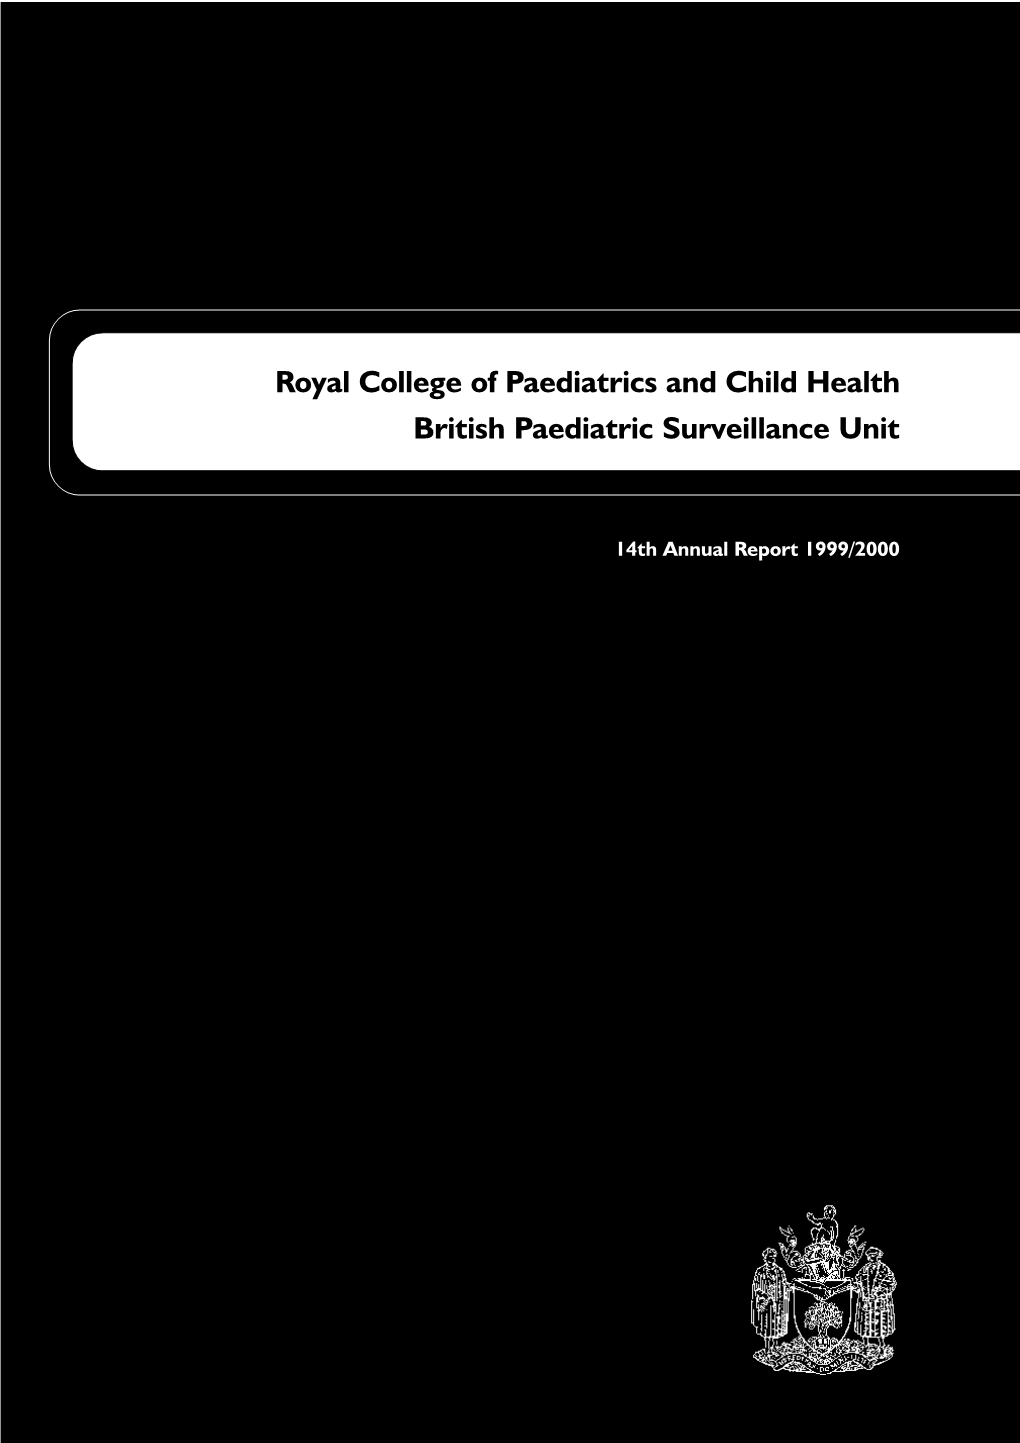 Royal College of Paediatrics and Child Health British Paediatric Surveillance Unit